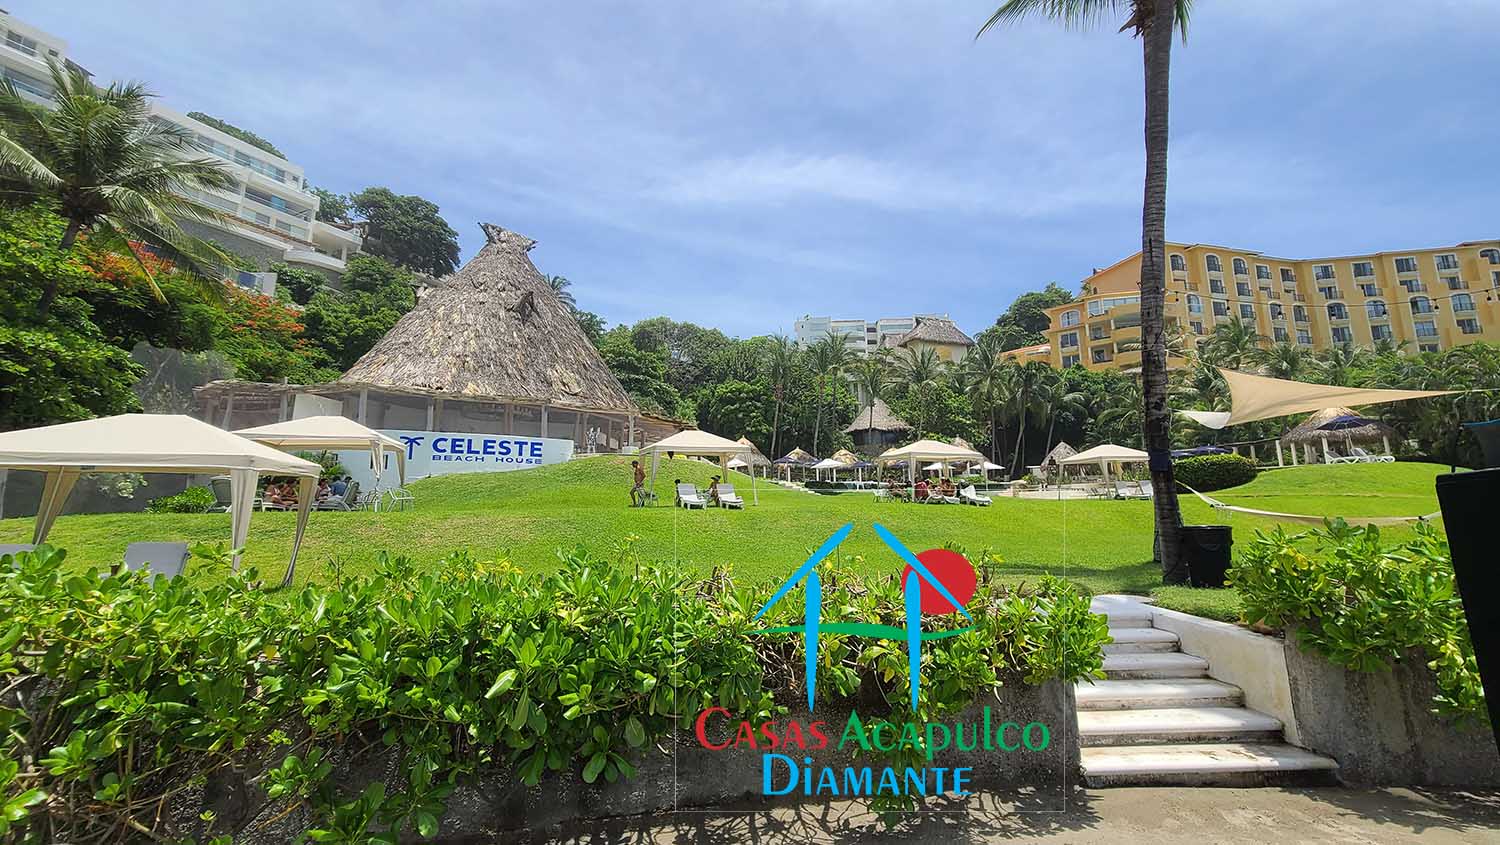 Real Diamante Villa Los Kaktus 1 - Celeste Beach House 12